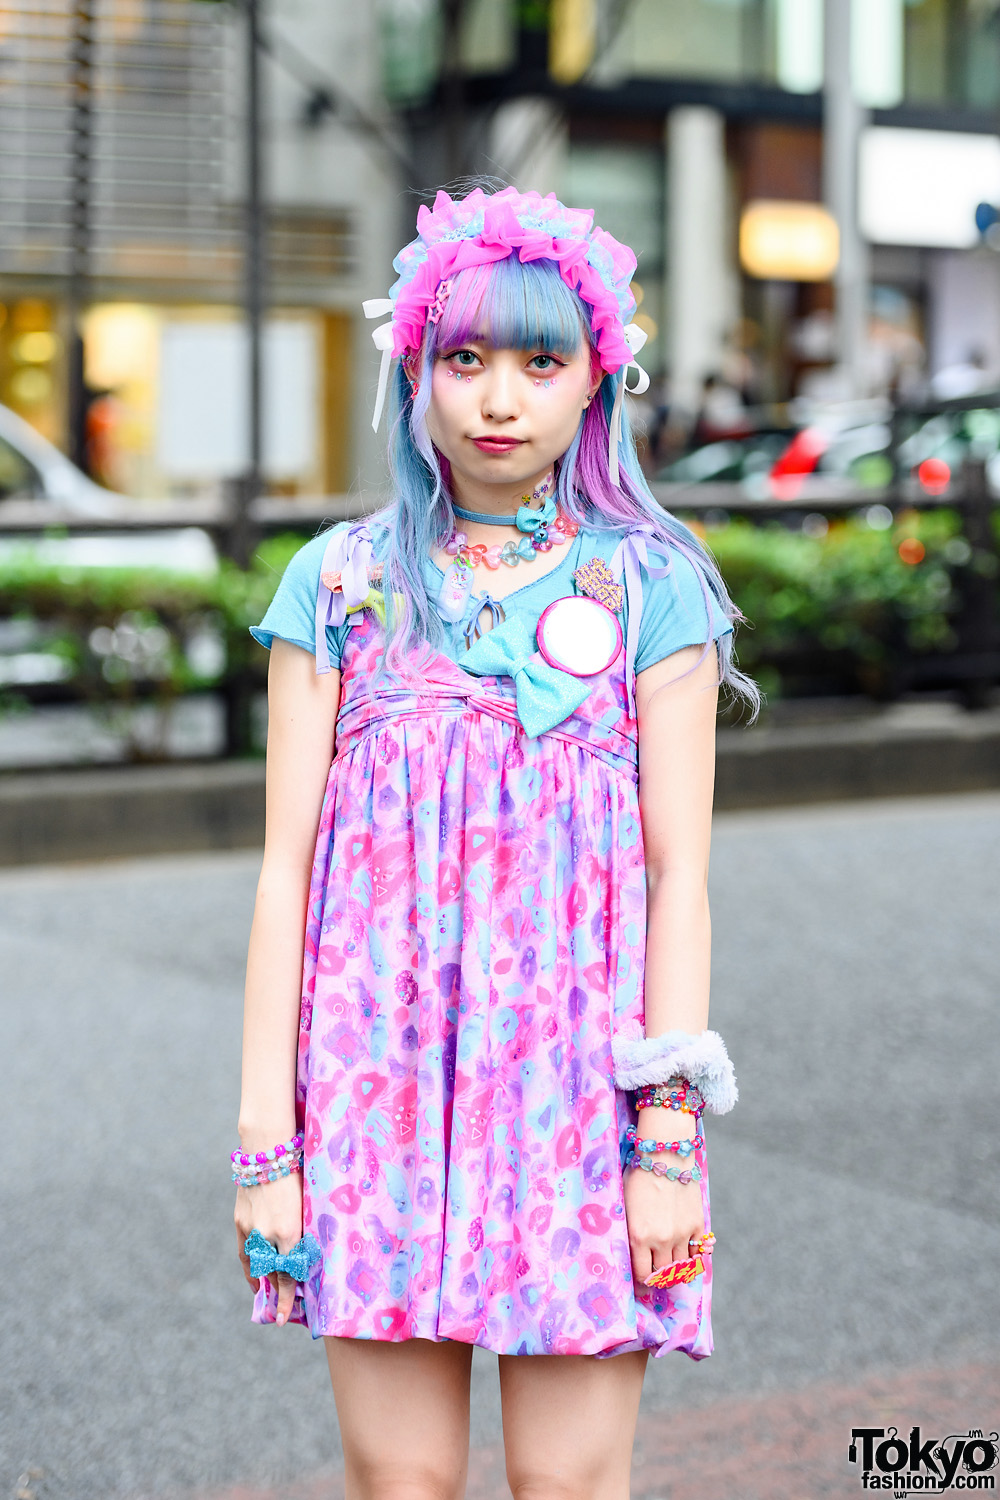 Harajuku Pastel Street Style w/ Unicorn Hair, Ruffled Bow Headdress, 6 ...